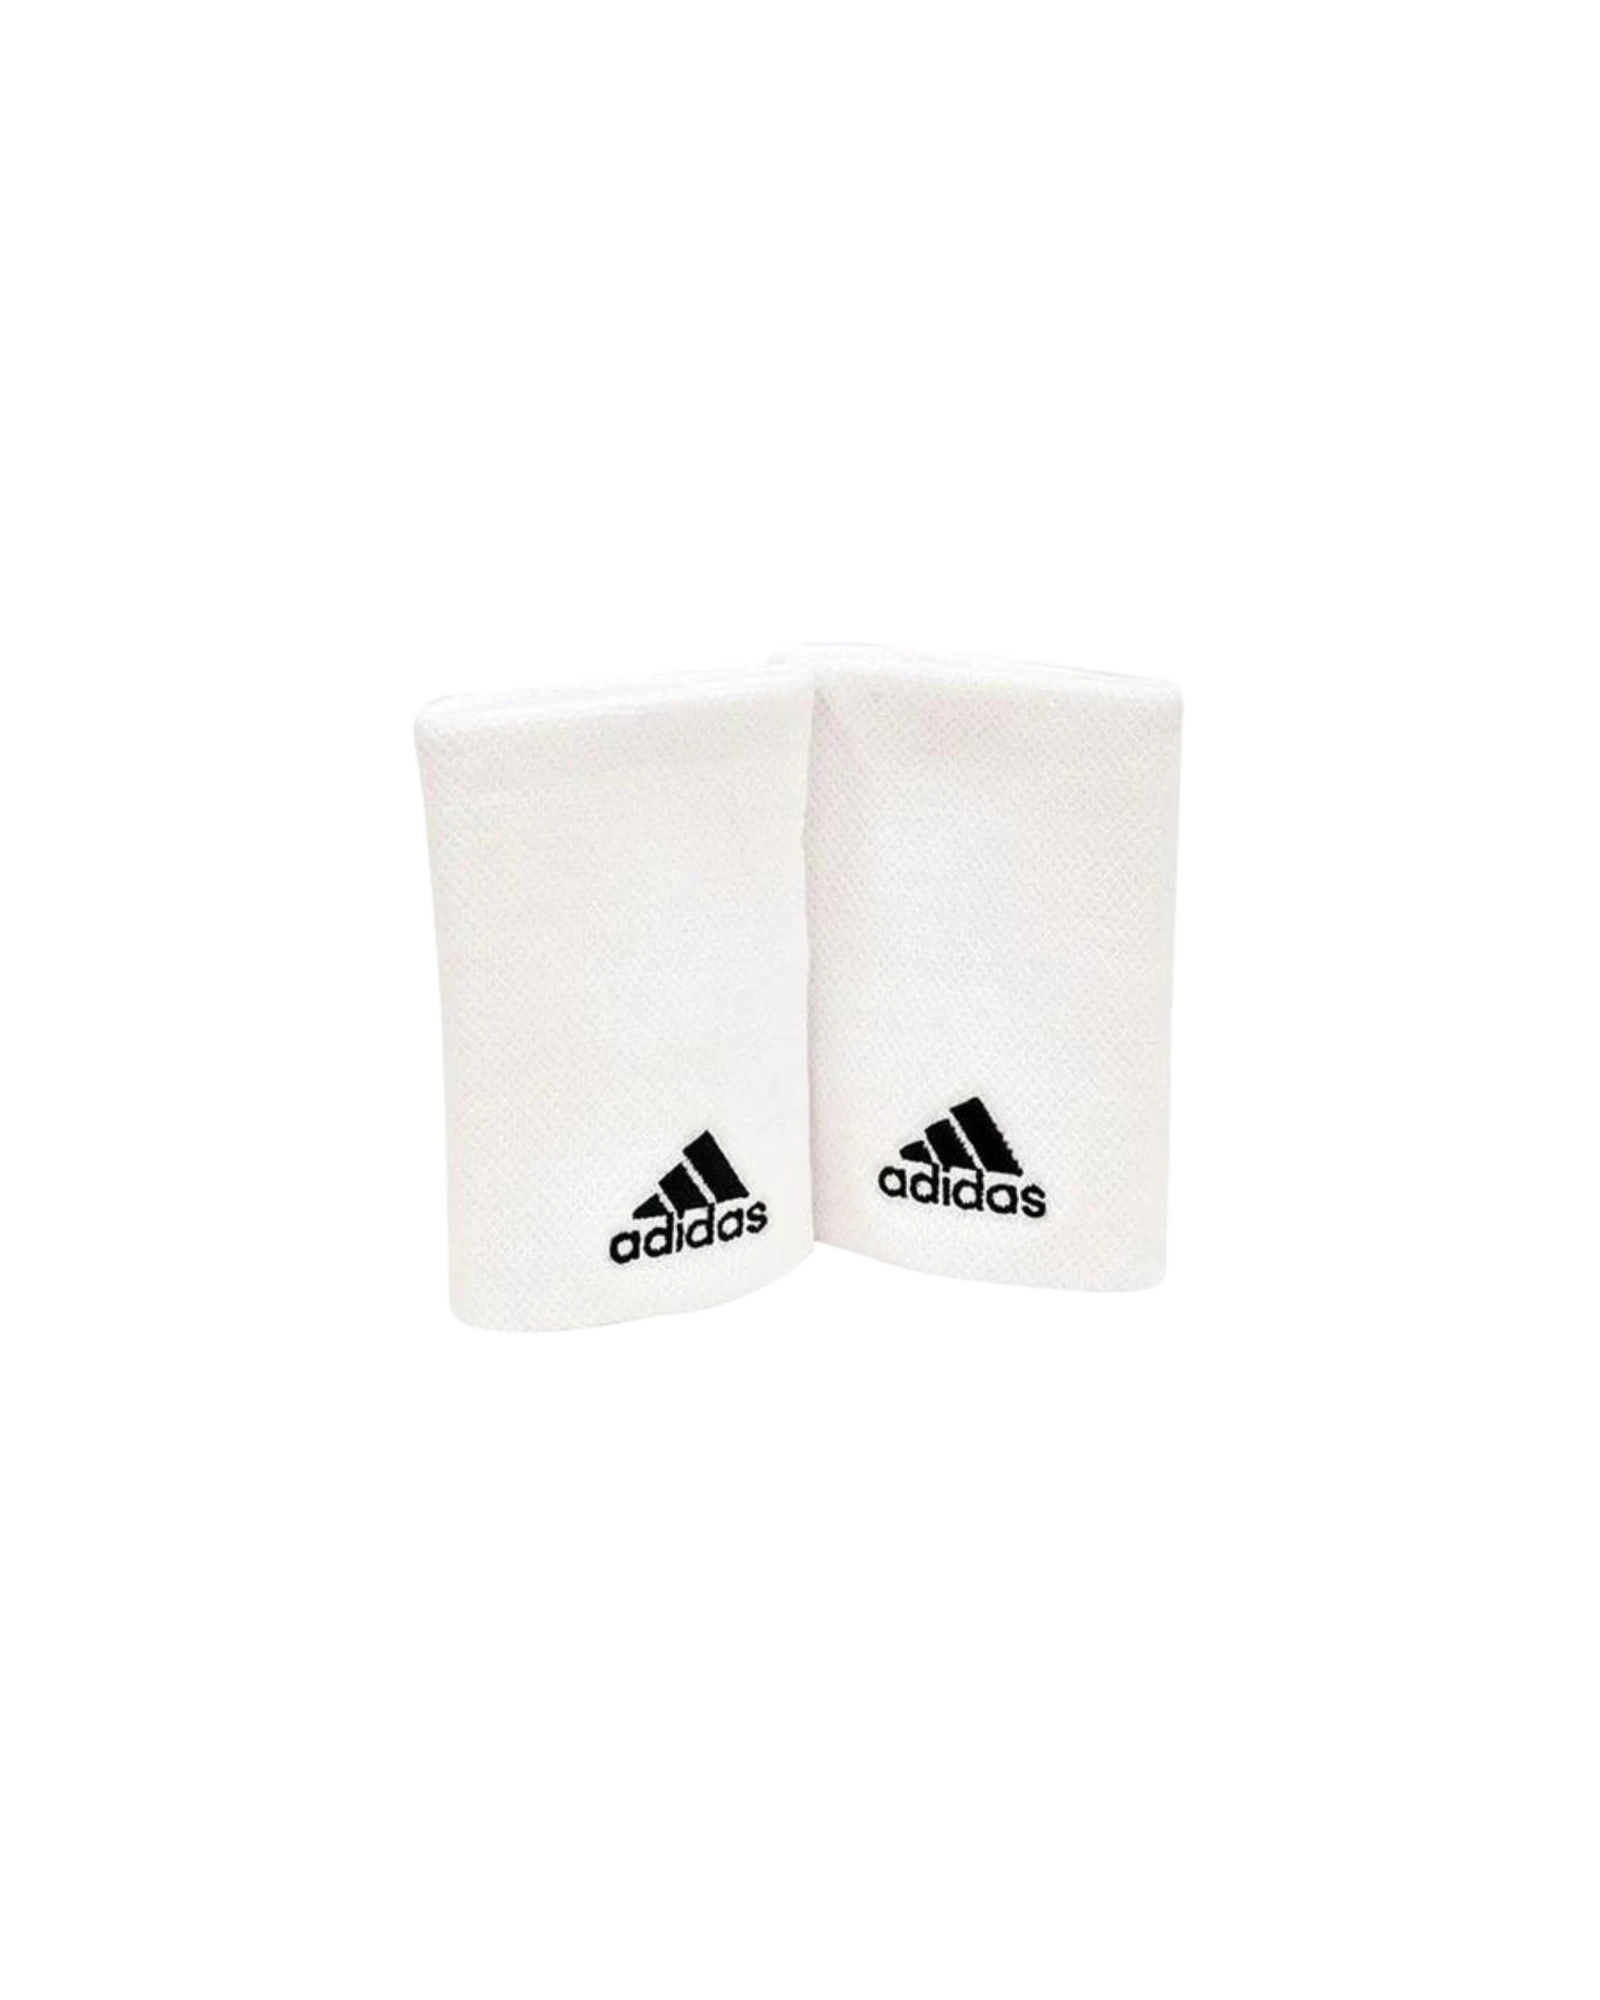 The Adidas WRISTBAND L x2 - WHITE/BLACK